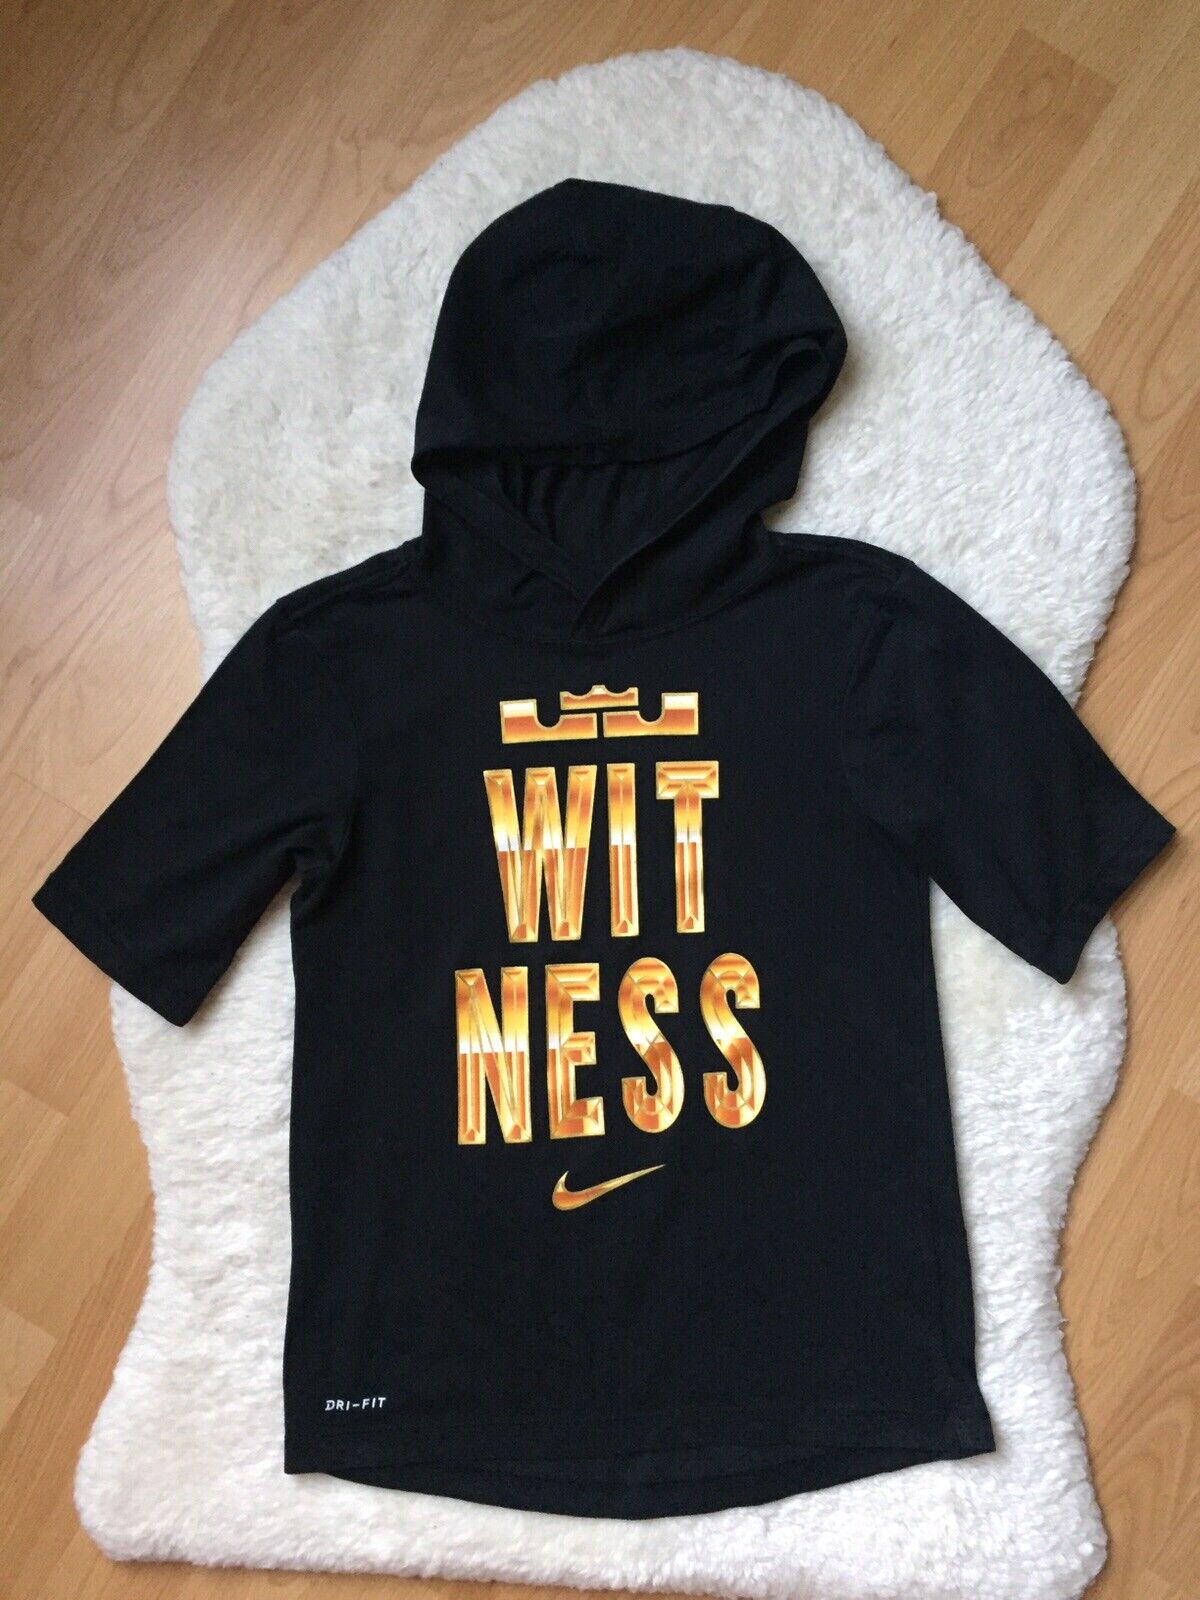 ze gids Filosofisch The Nike Tee Hoodie Girls Black Dri Fit T Shirt “WIT NESS” Gold Logo Sz S  Small | eBay